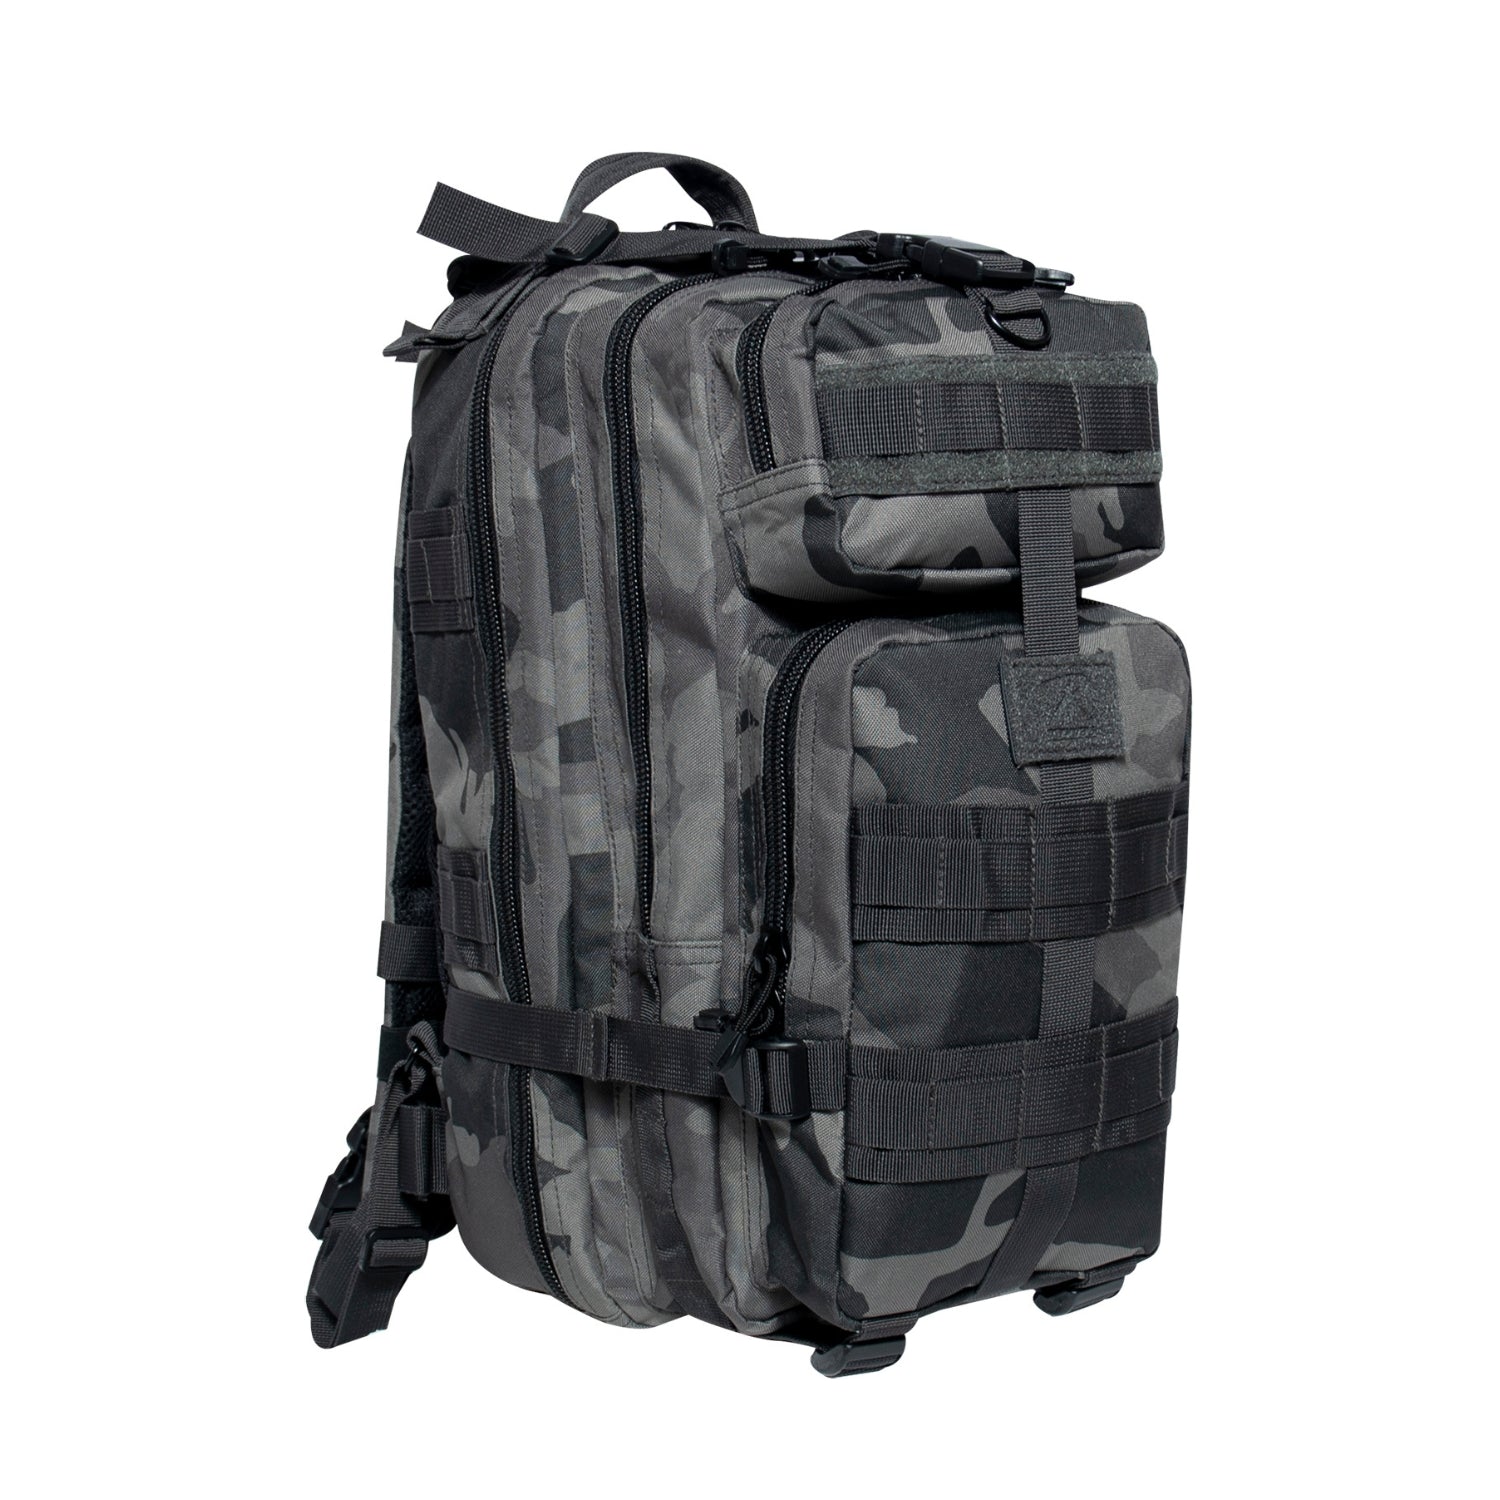 Rothco Camo Medium Transport Pack | All Security Equipment - 17